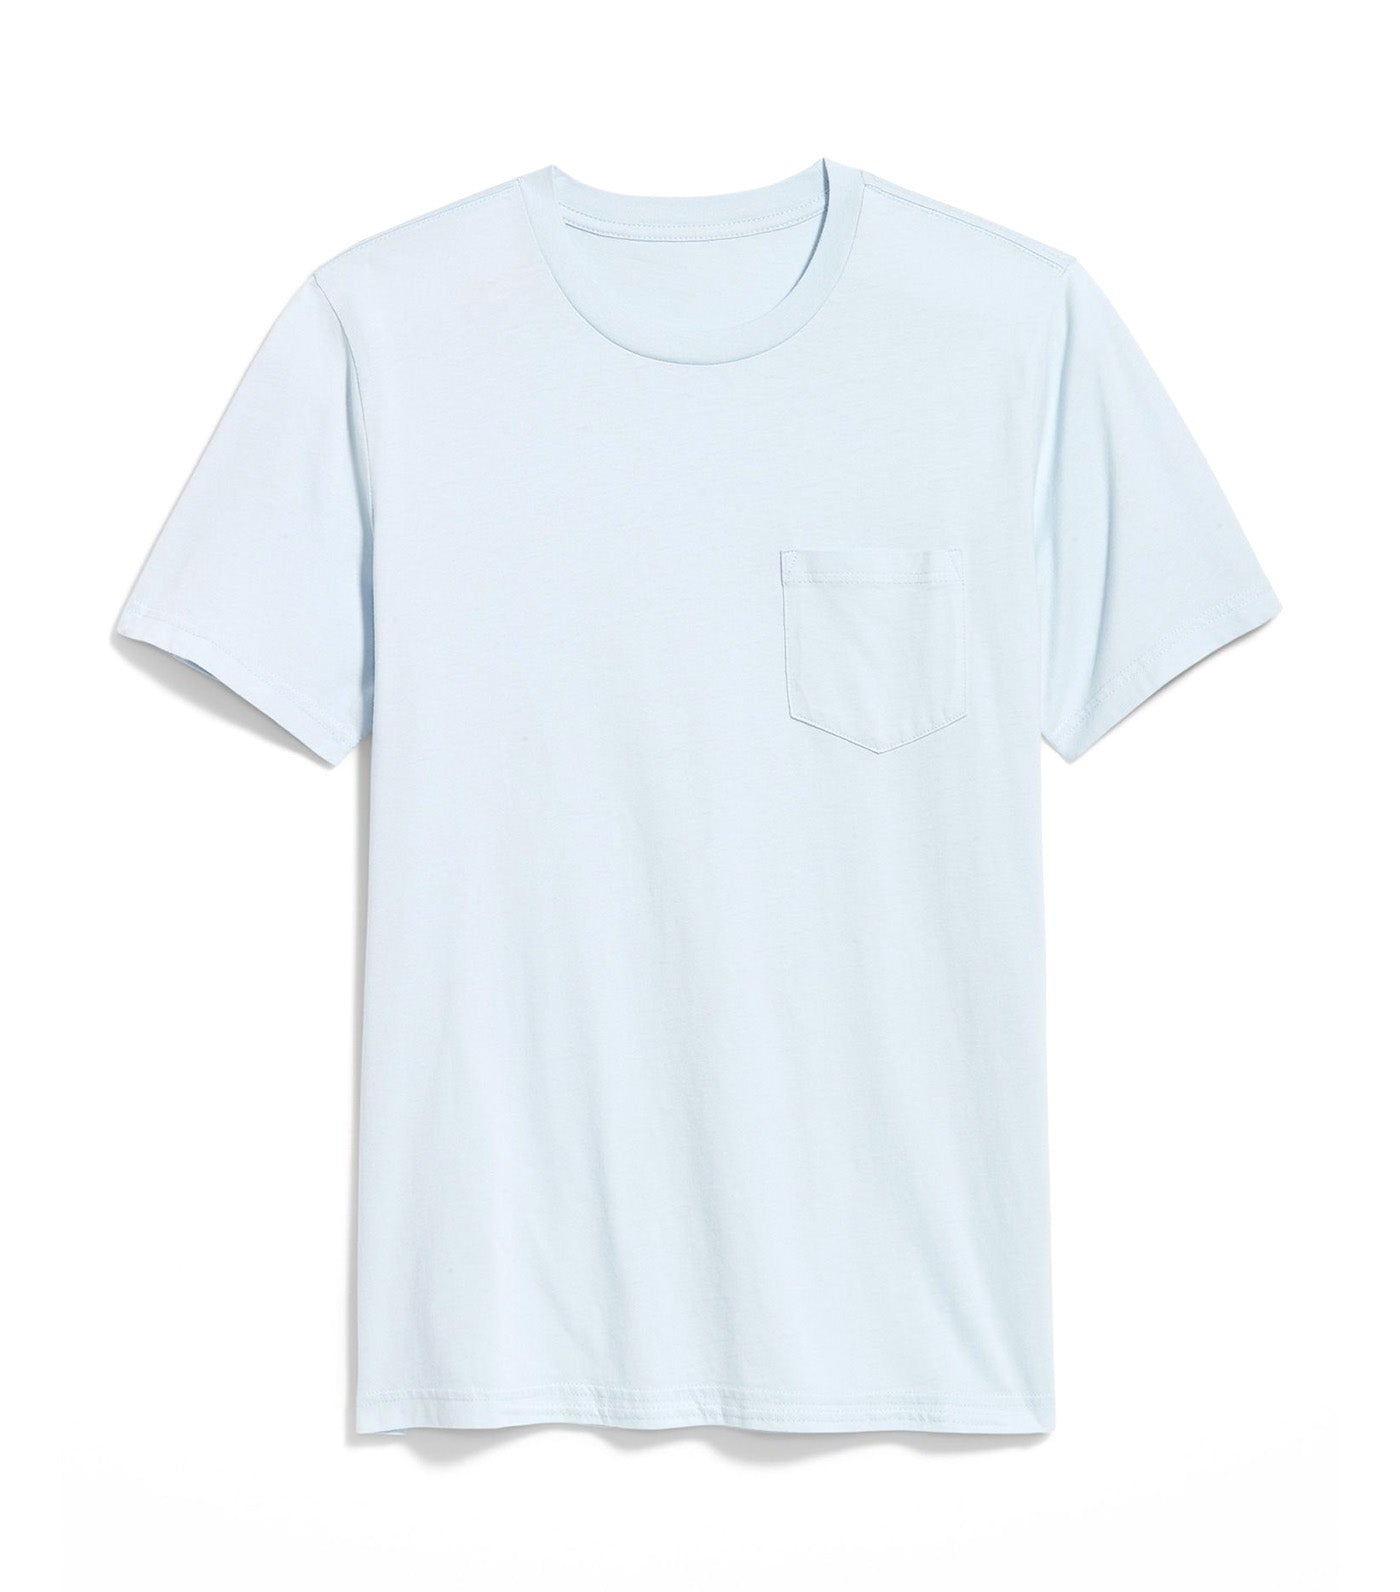 Crew-Neck Pocket T-Shirt for Men Microchip